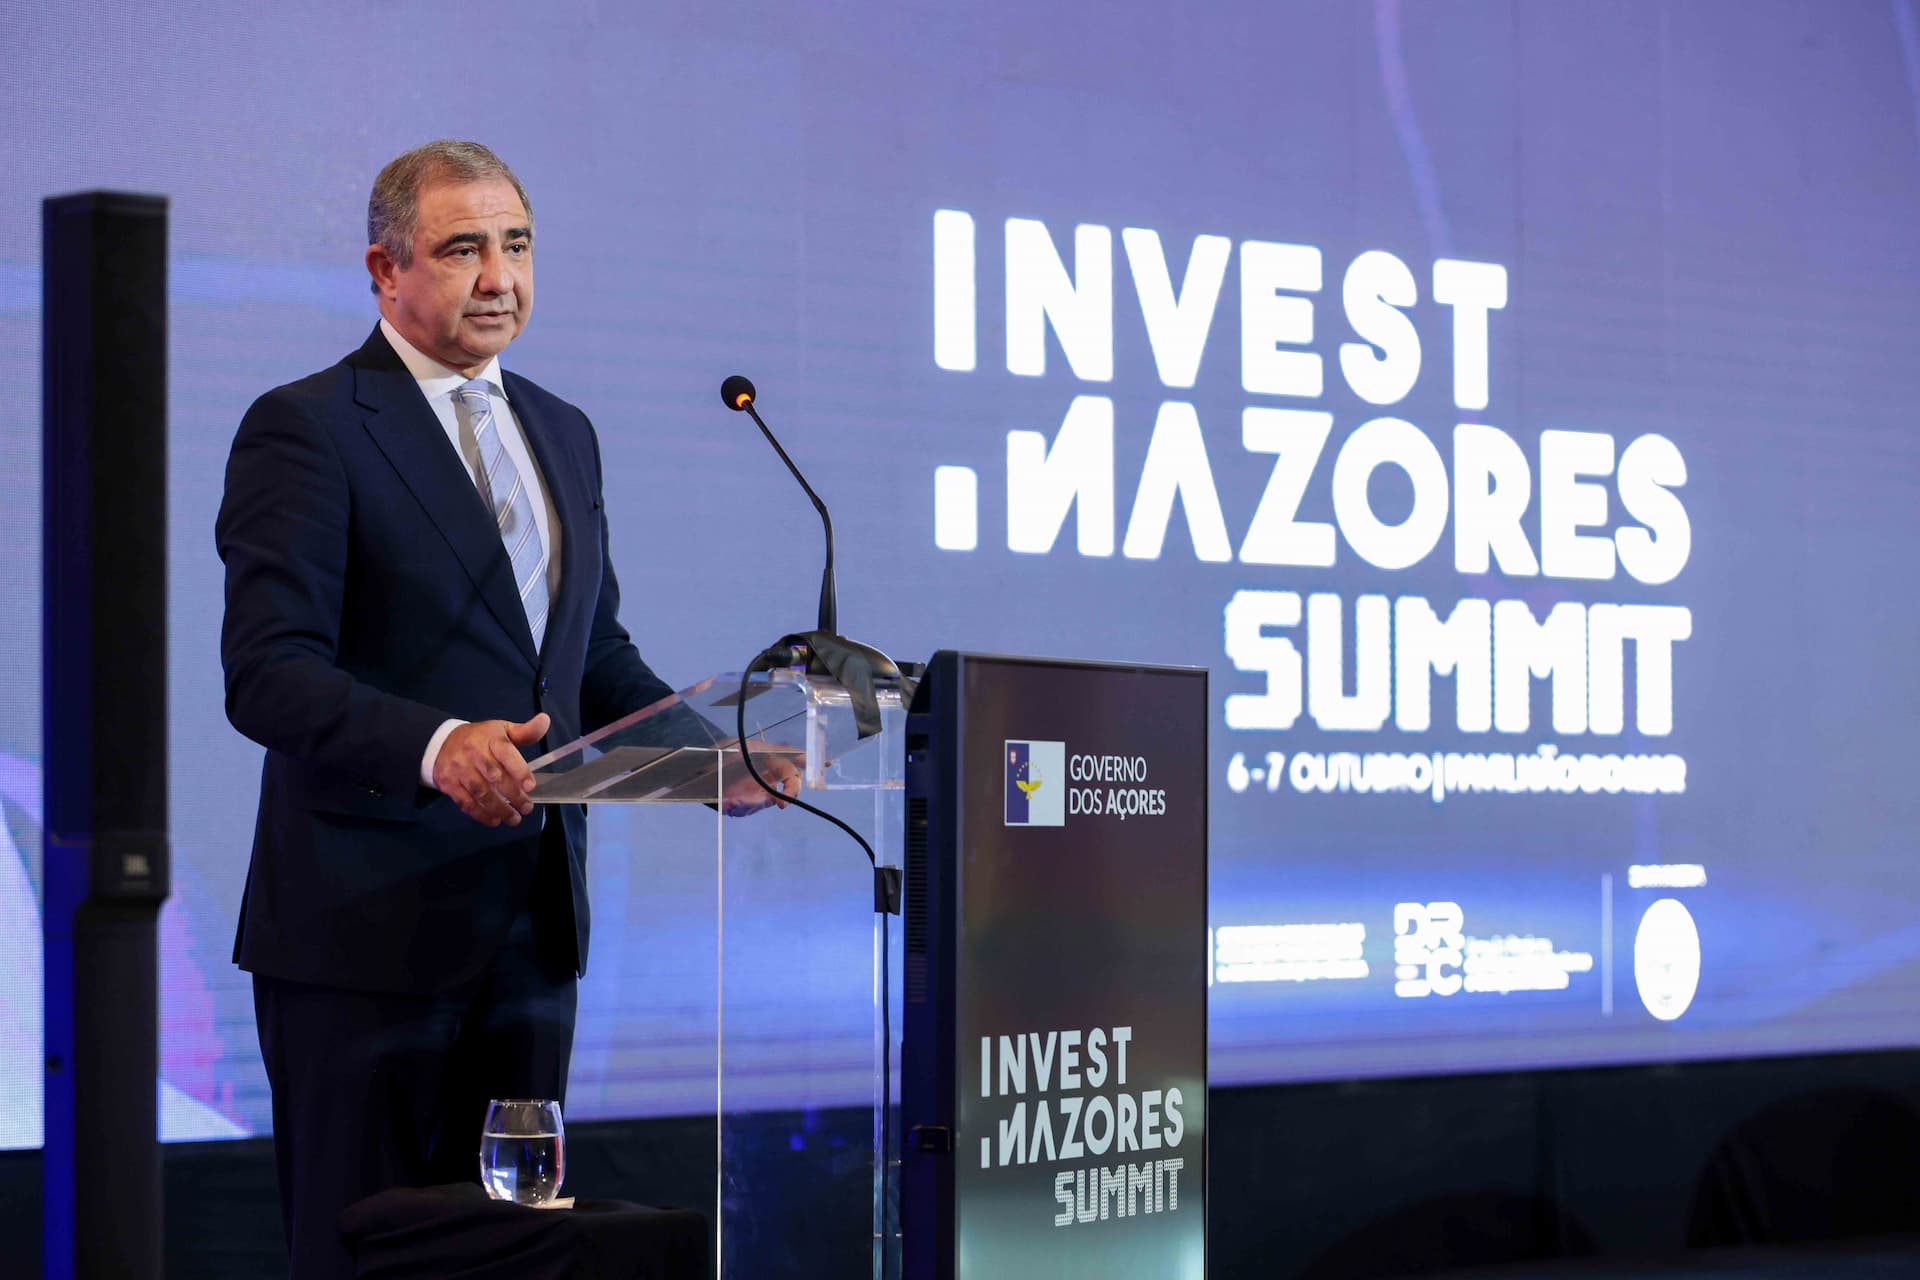 Invest In Azores Summit – Sessão de Encerramento